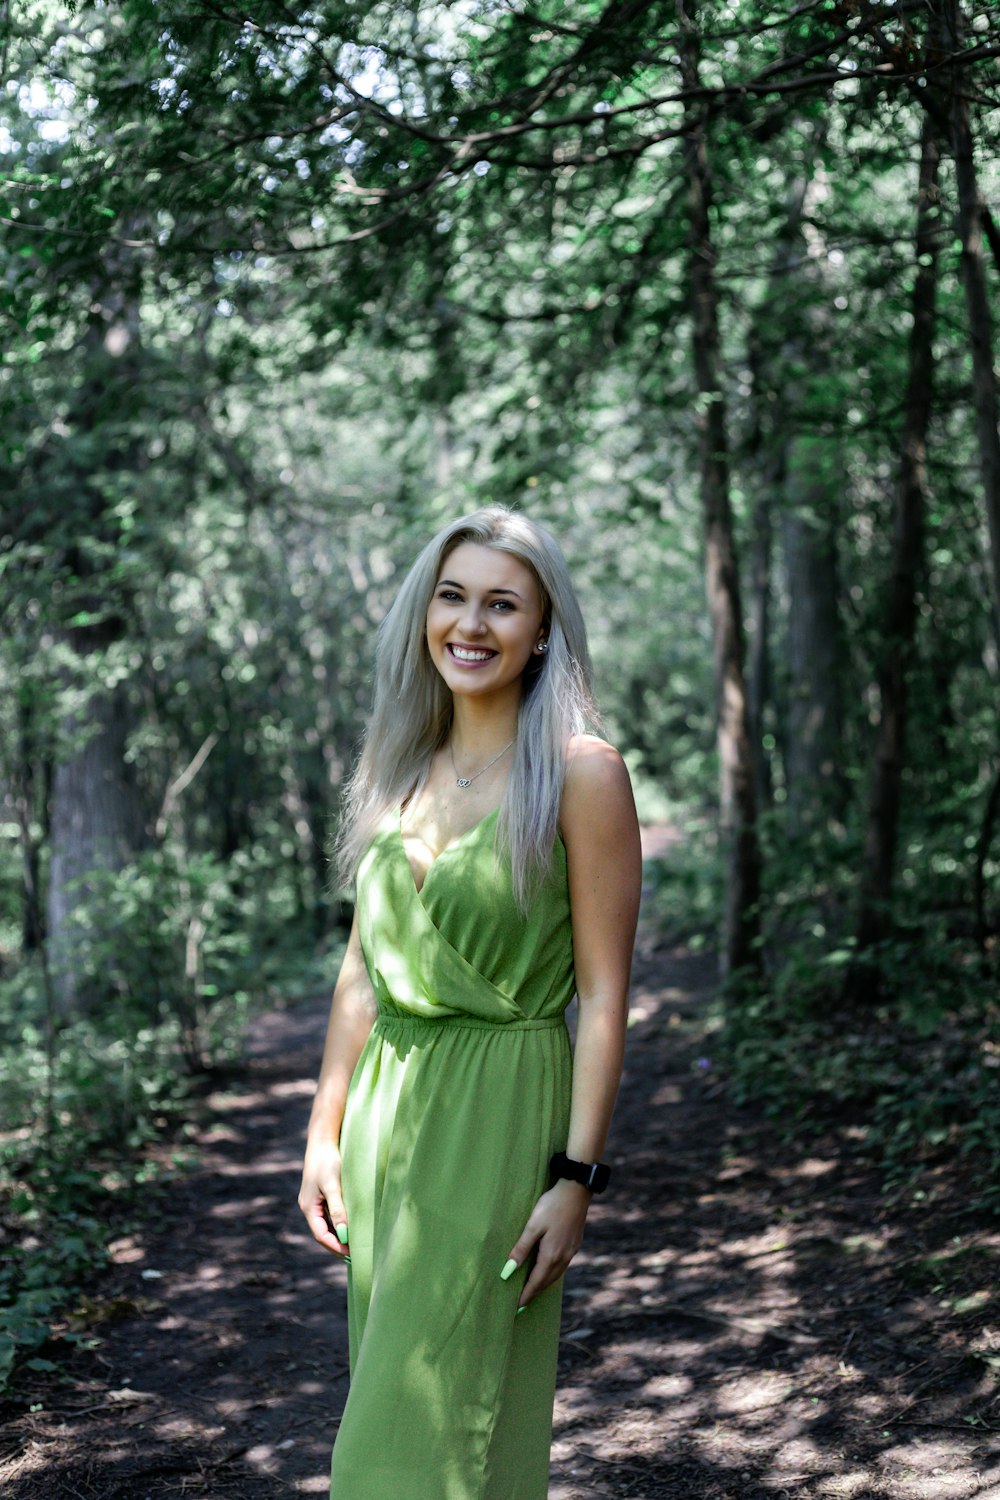 Frau in grünem ärmellosem Kleid, die tagsüber im Wald steht